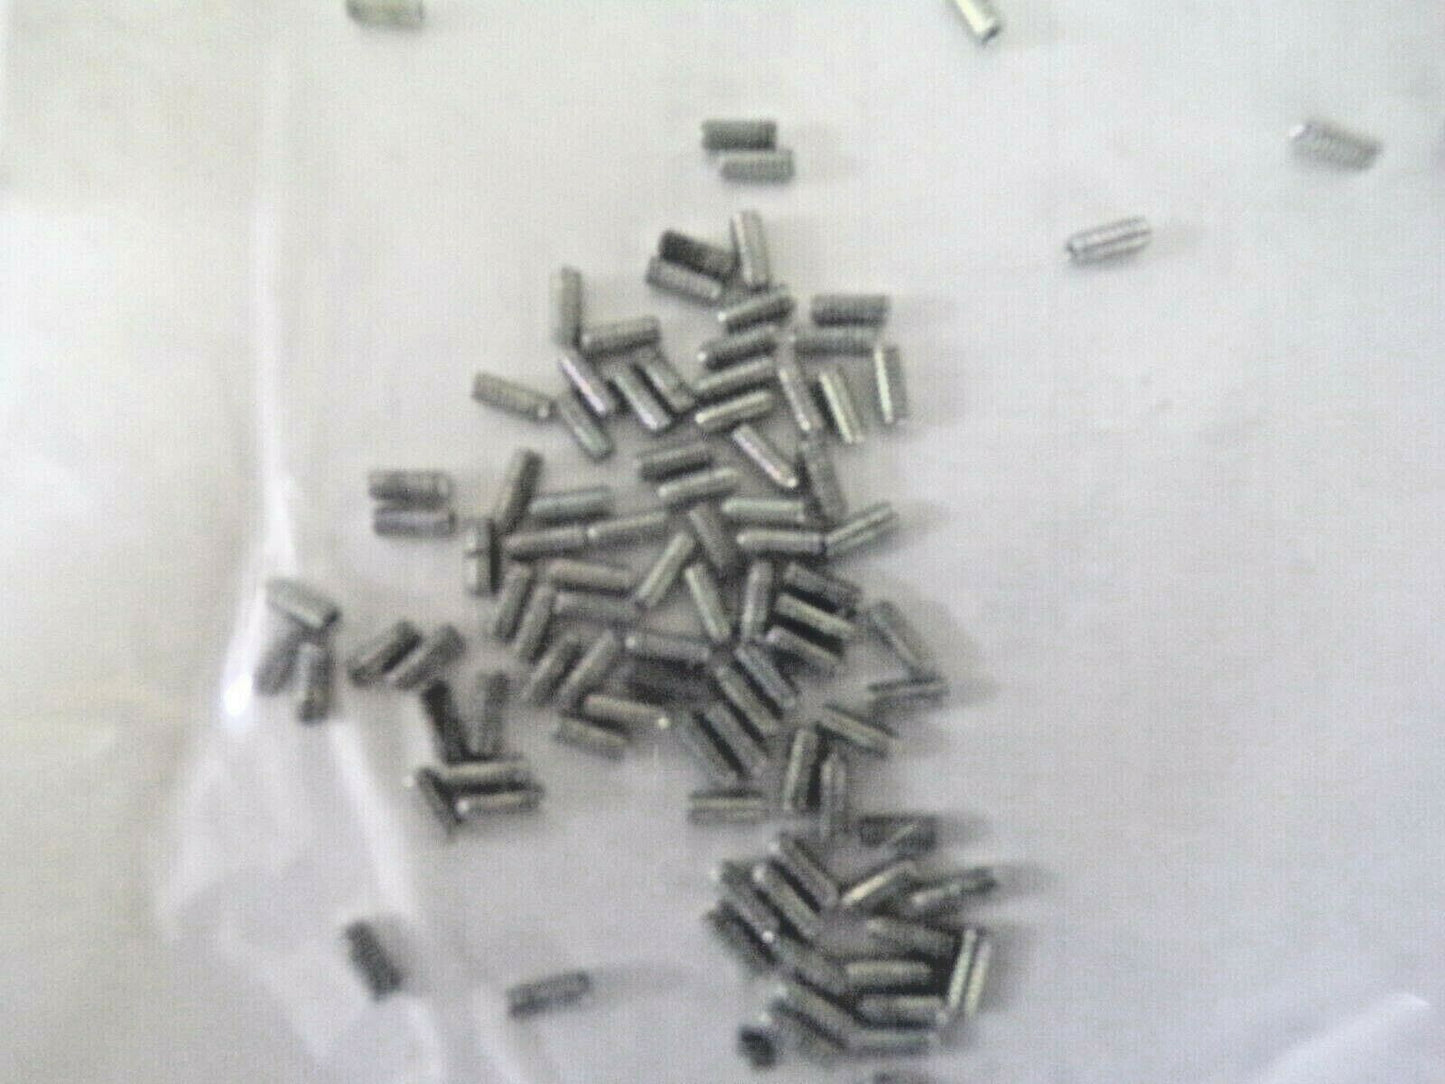 4-40 x 1/4" Alloy Steel Set Screw with Zinc Plated Finish; PK100, (184036231033-NBT57)